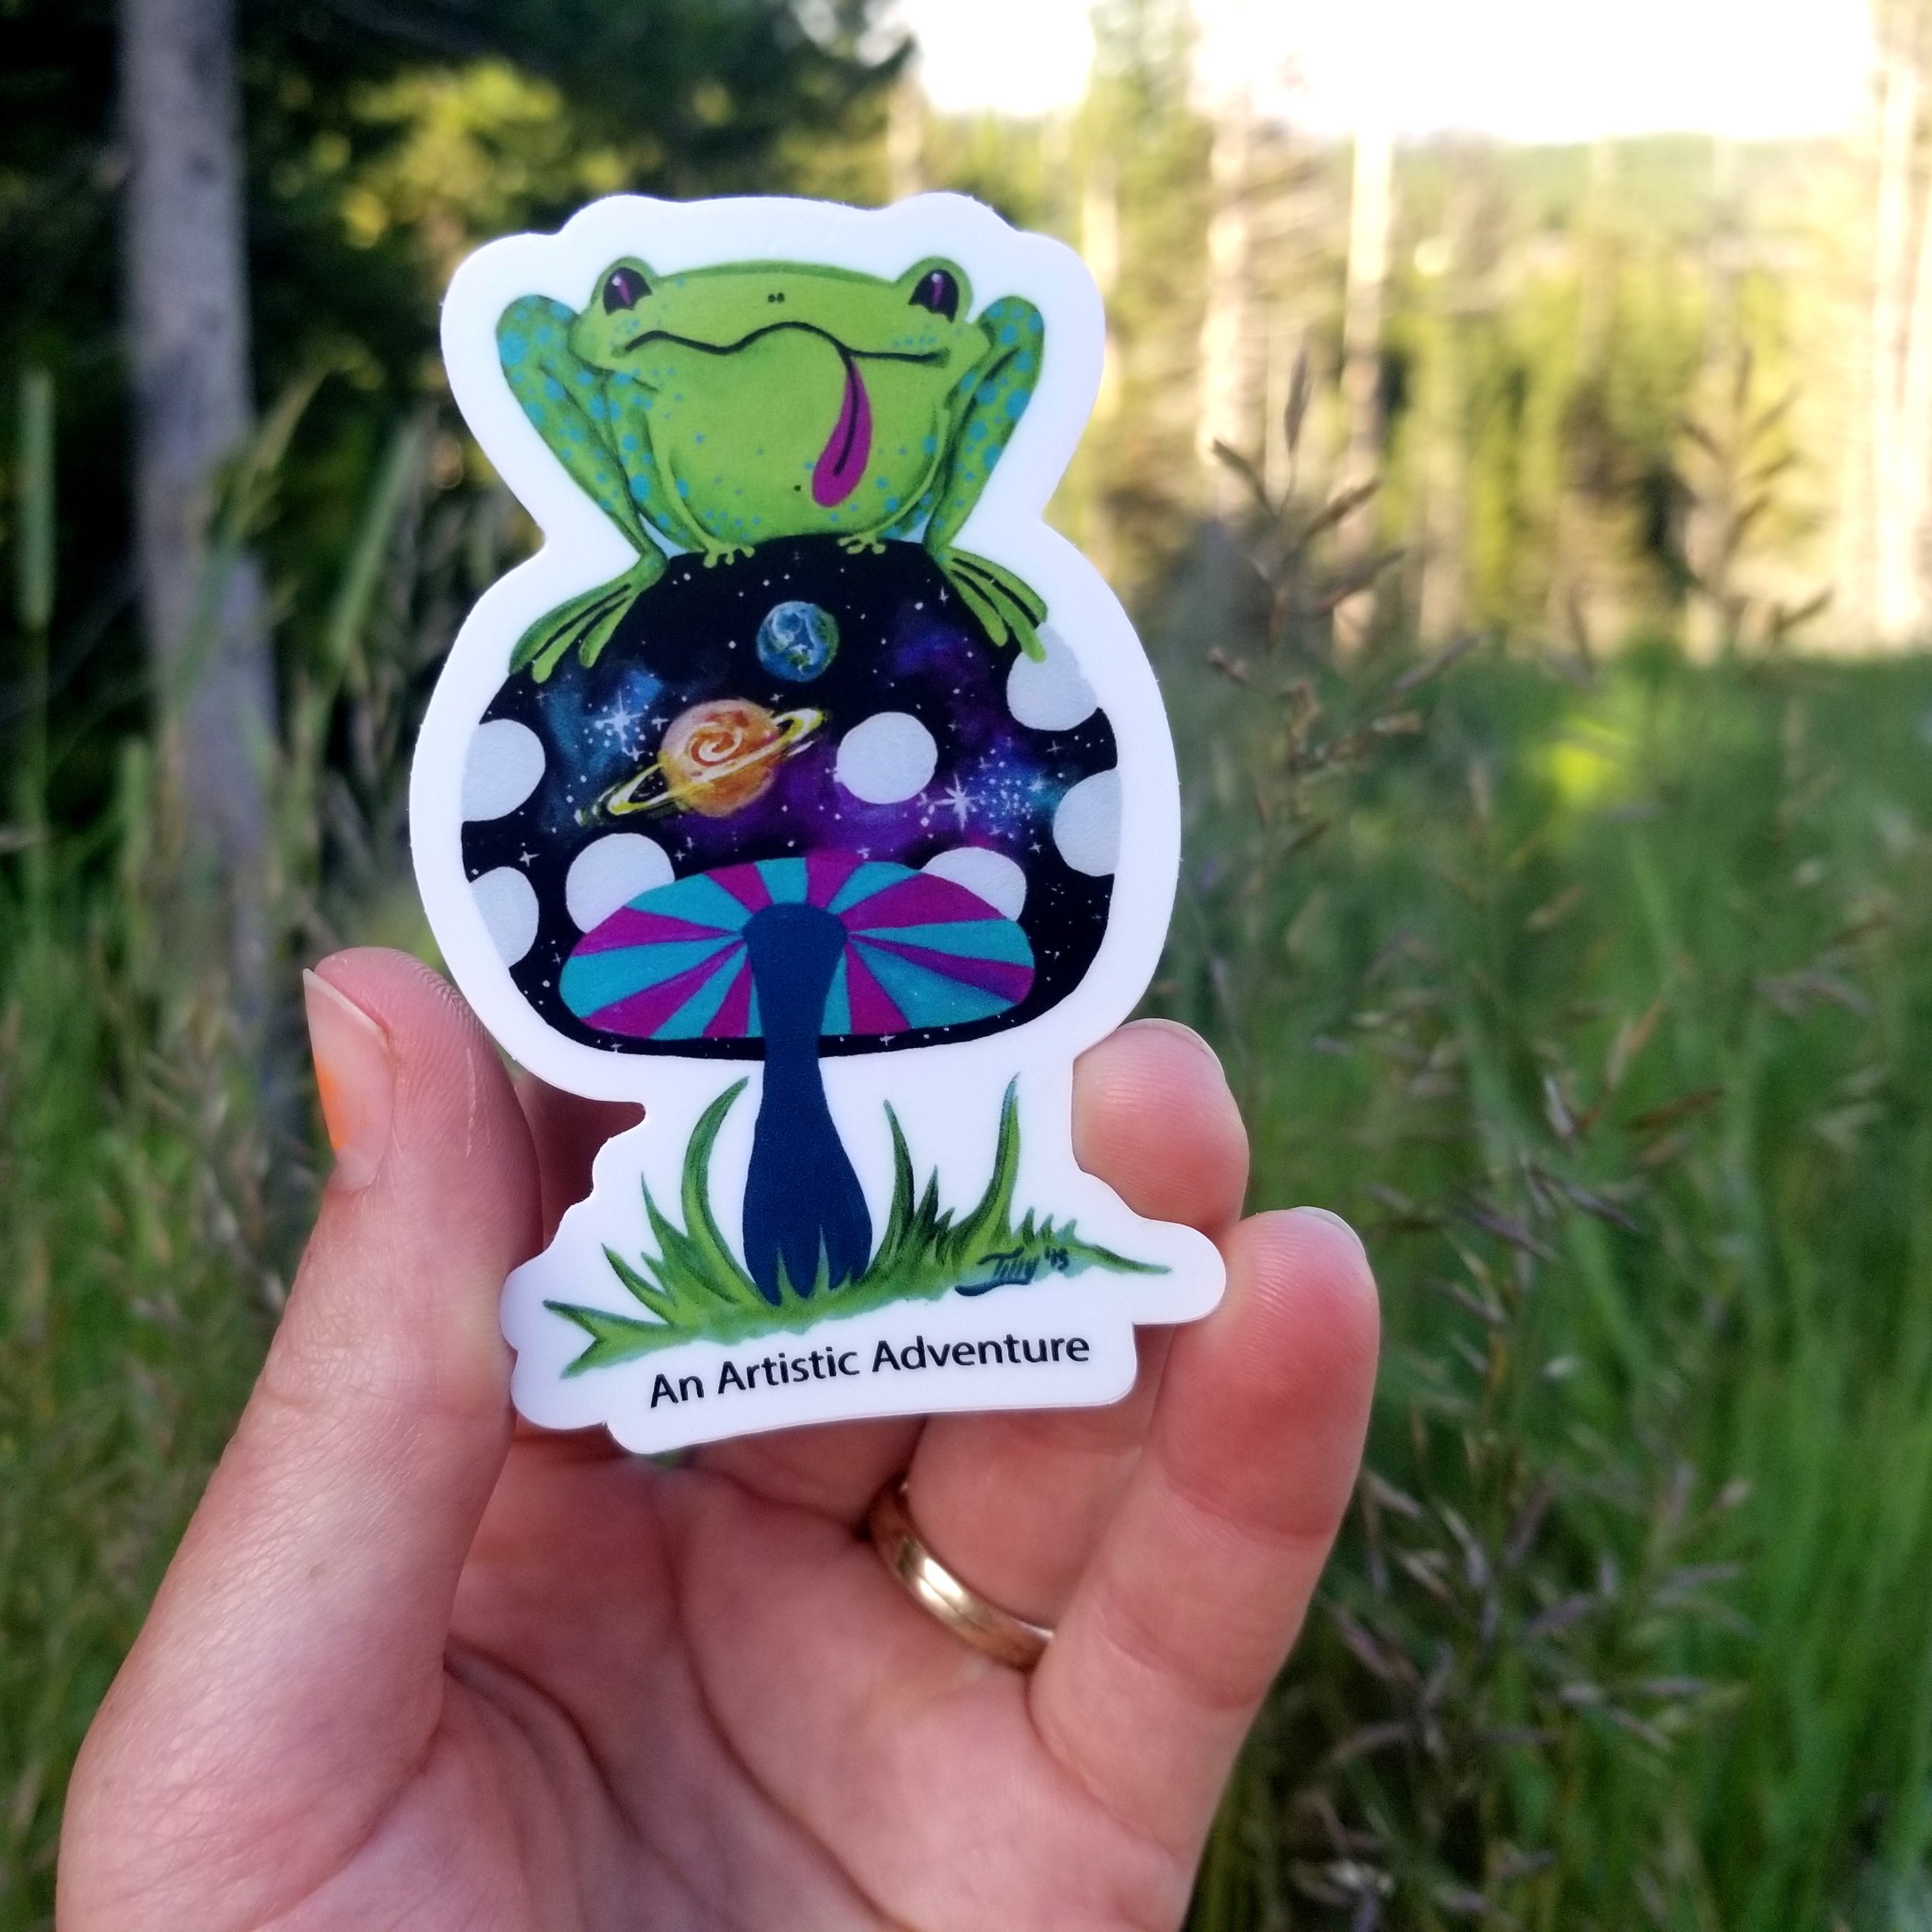 frog-on-mushroom-sticker-buy-stickers-from-independent-artists-Matilda-wentzel-unique-artisan-stickers.jpg